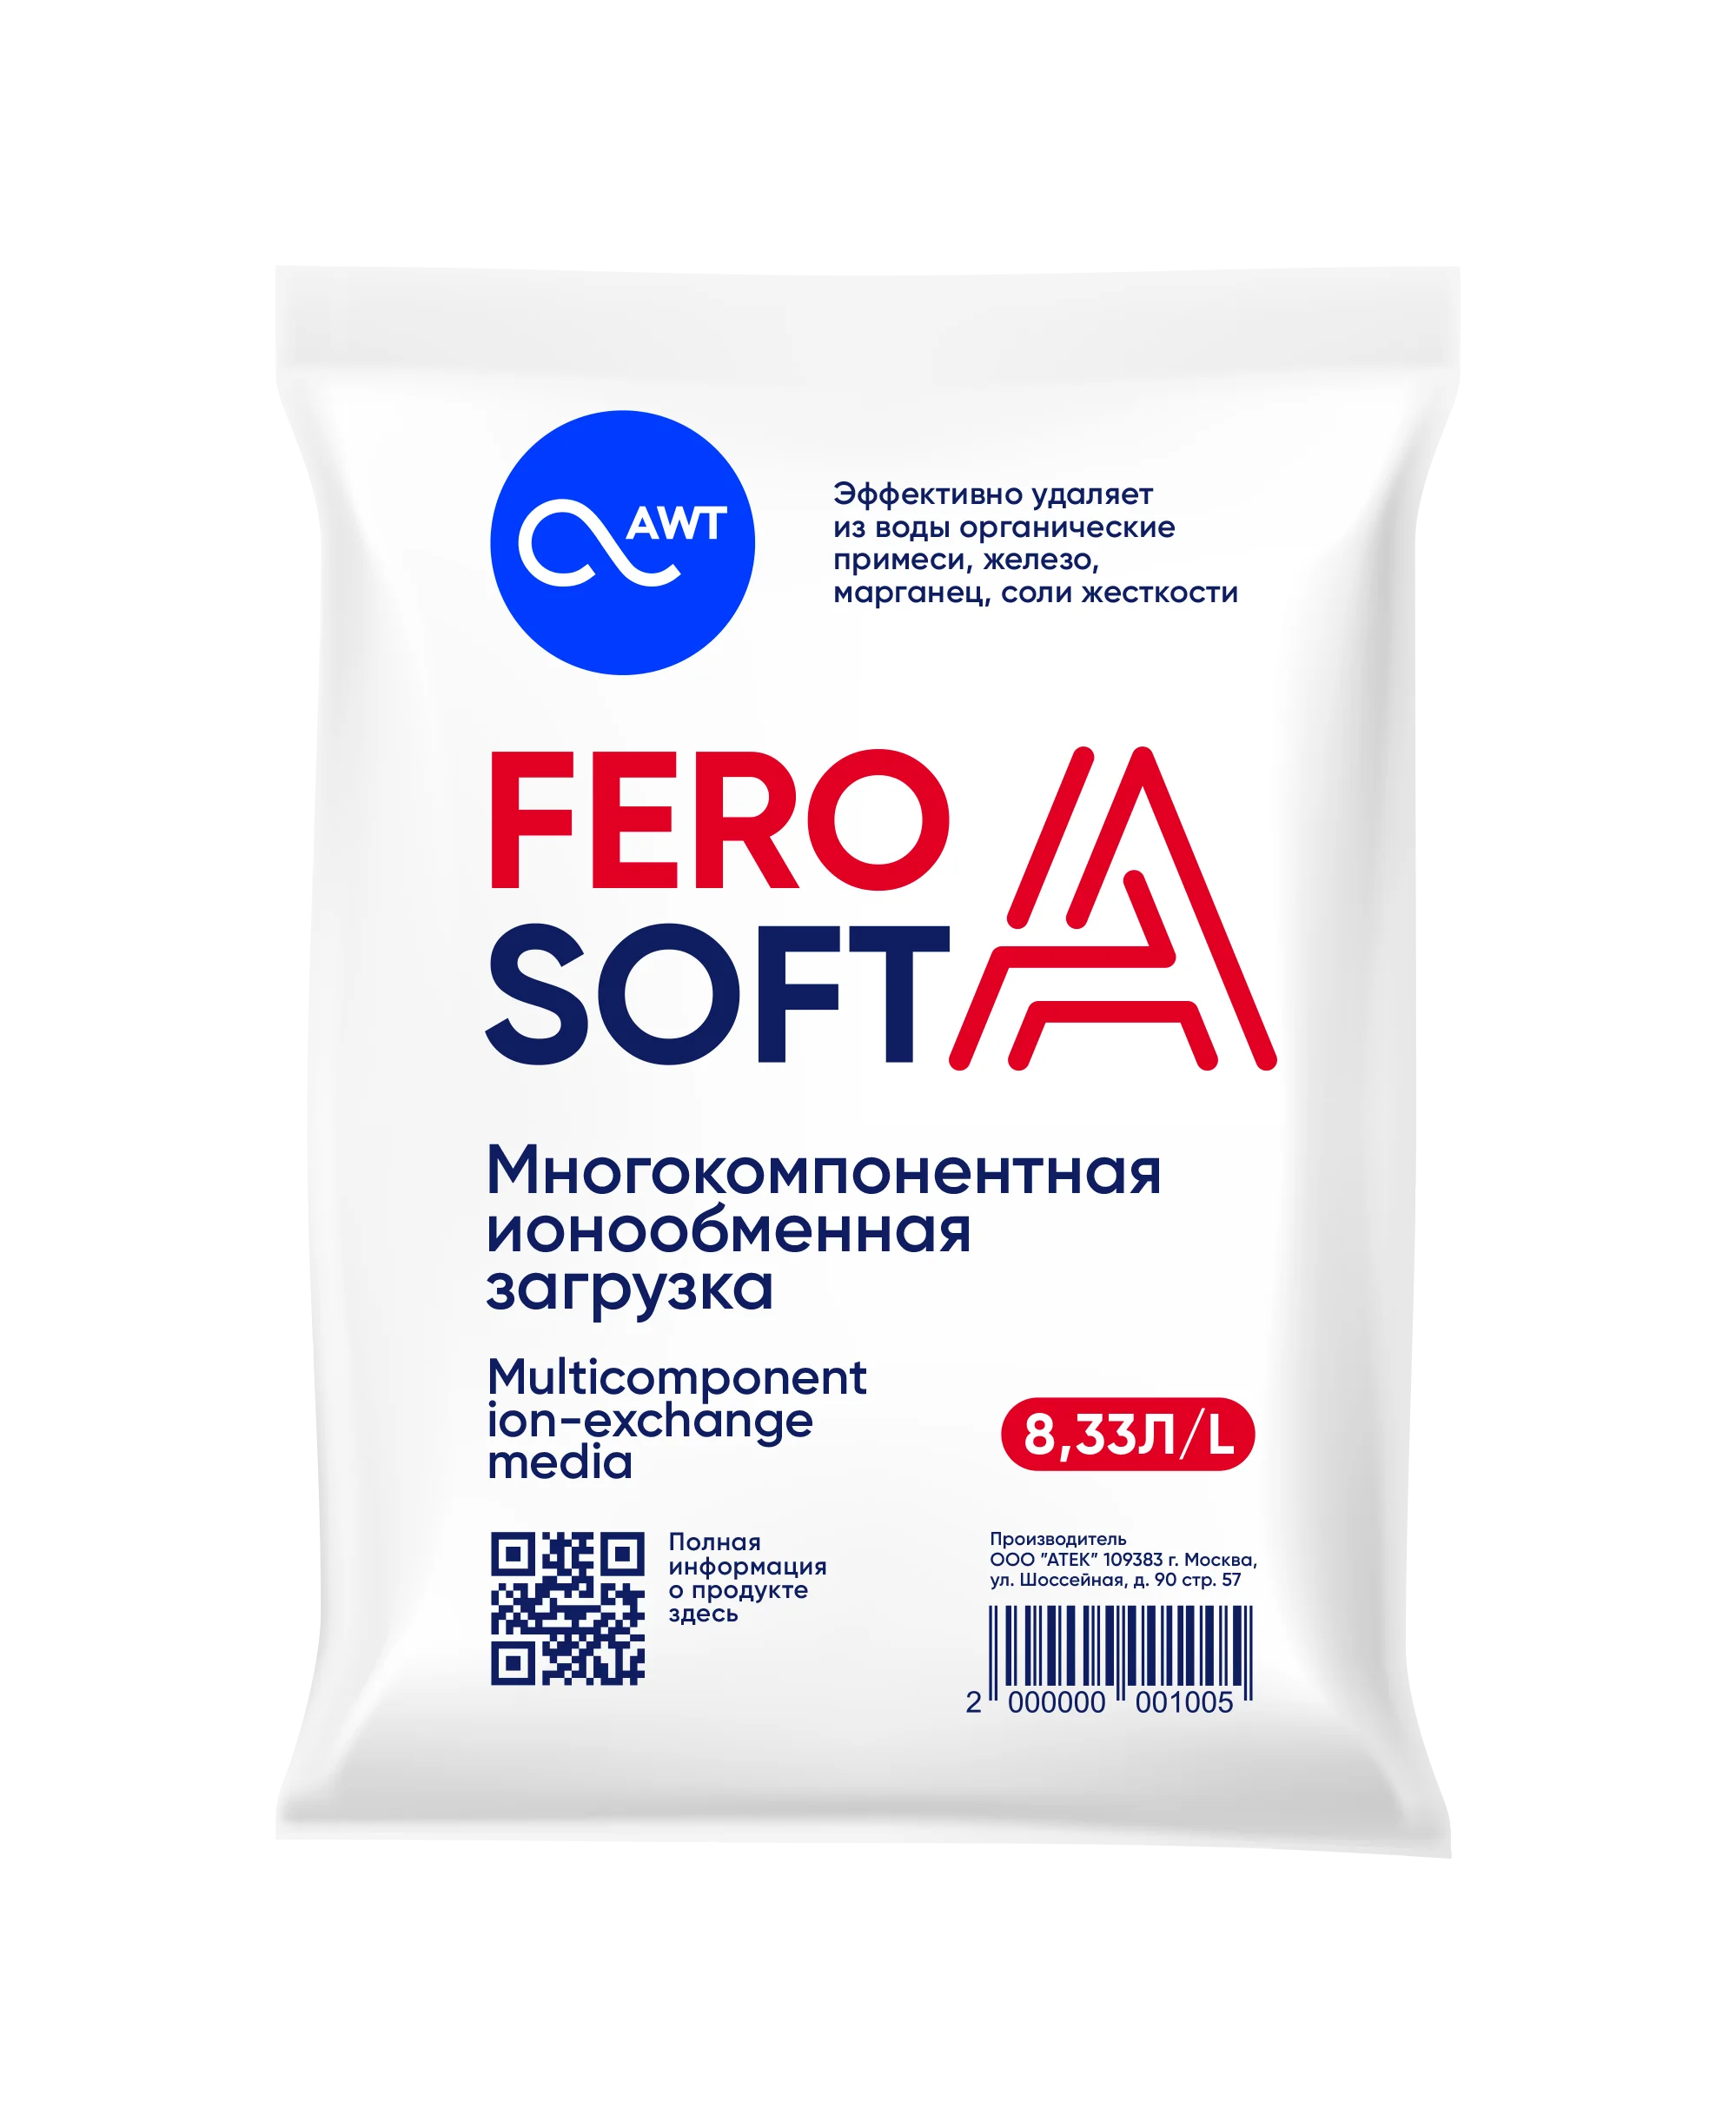 FeroSoft A (ФероСофт А)